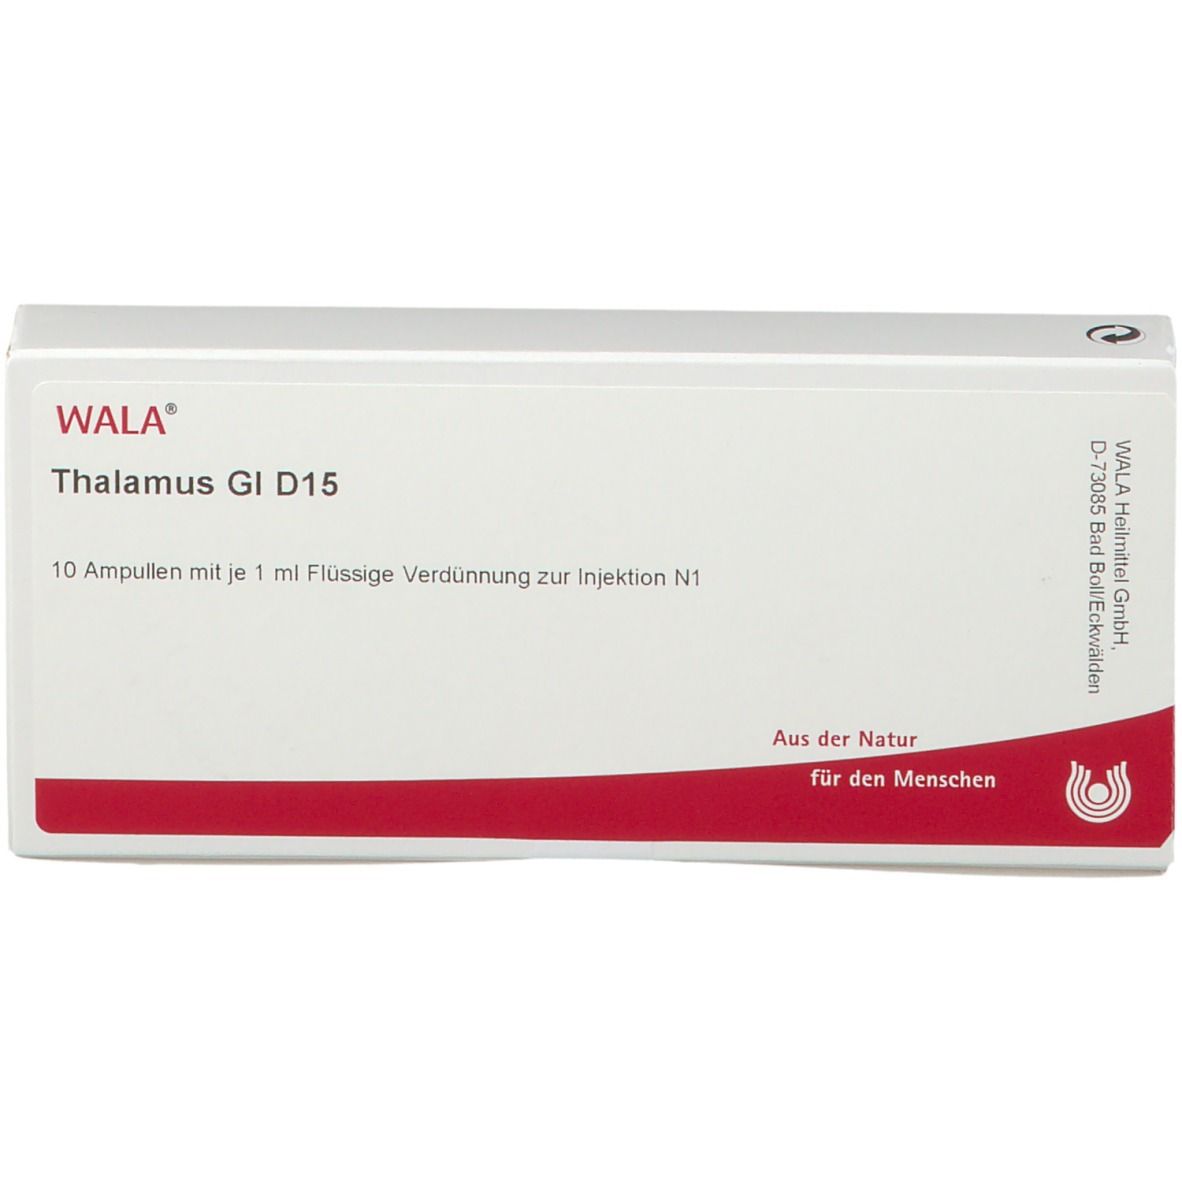 WALA® Thalamus Gl D 15